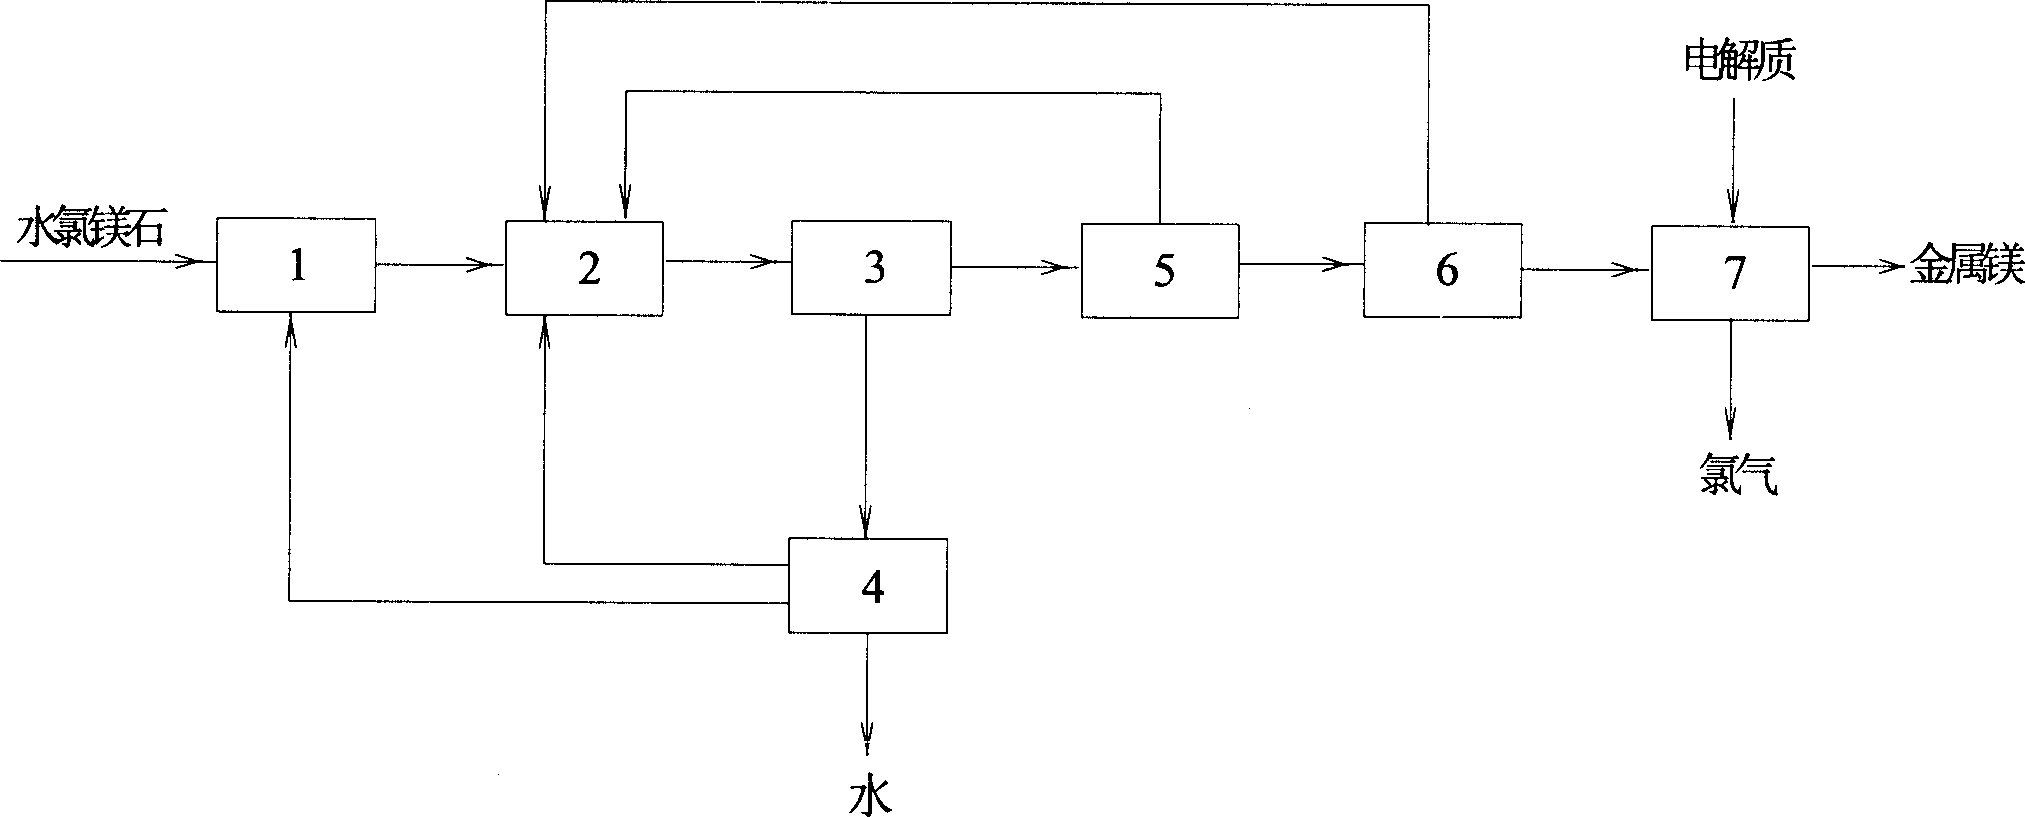 Bischofite dehydration-electrolysis method for refining magnesian